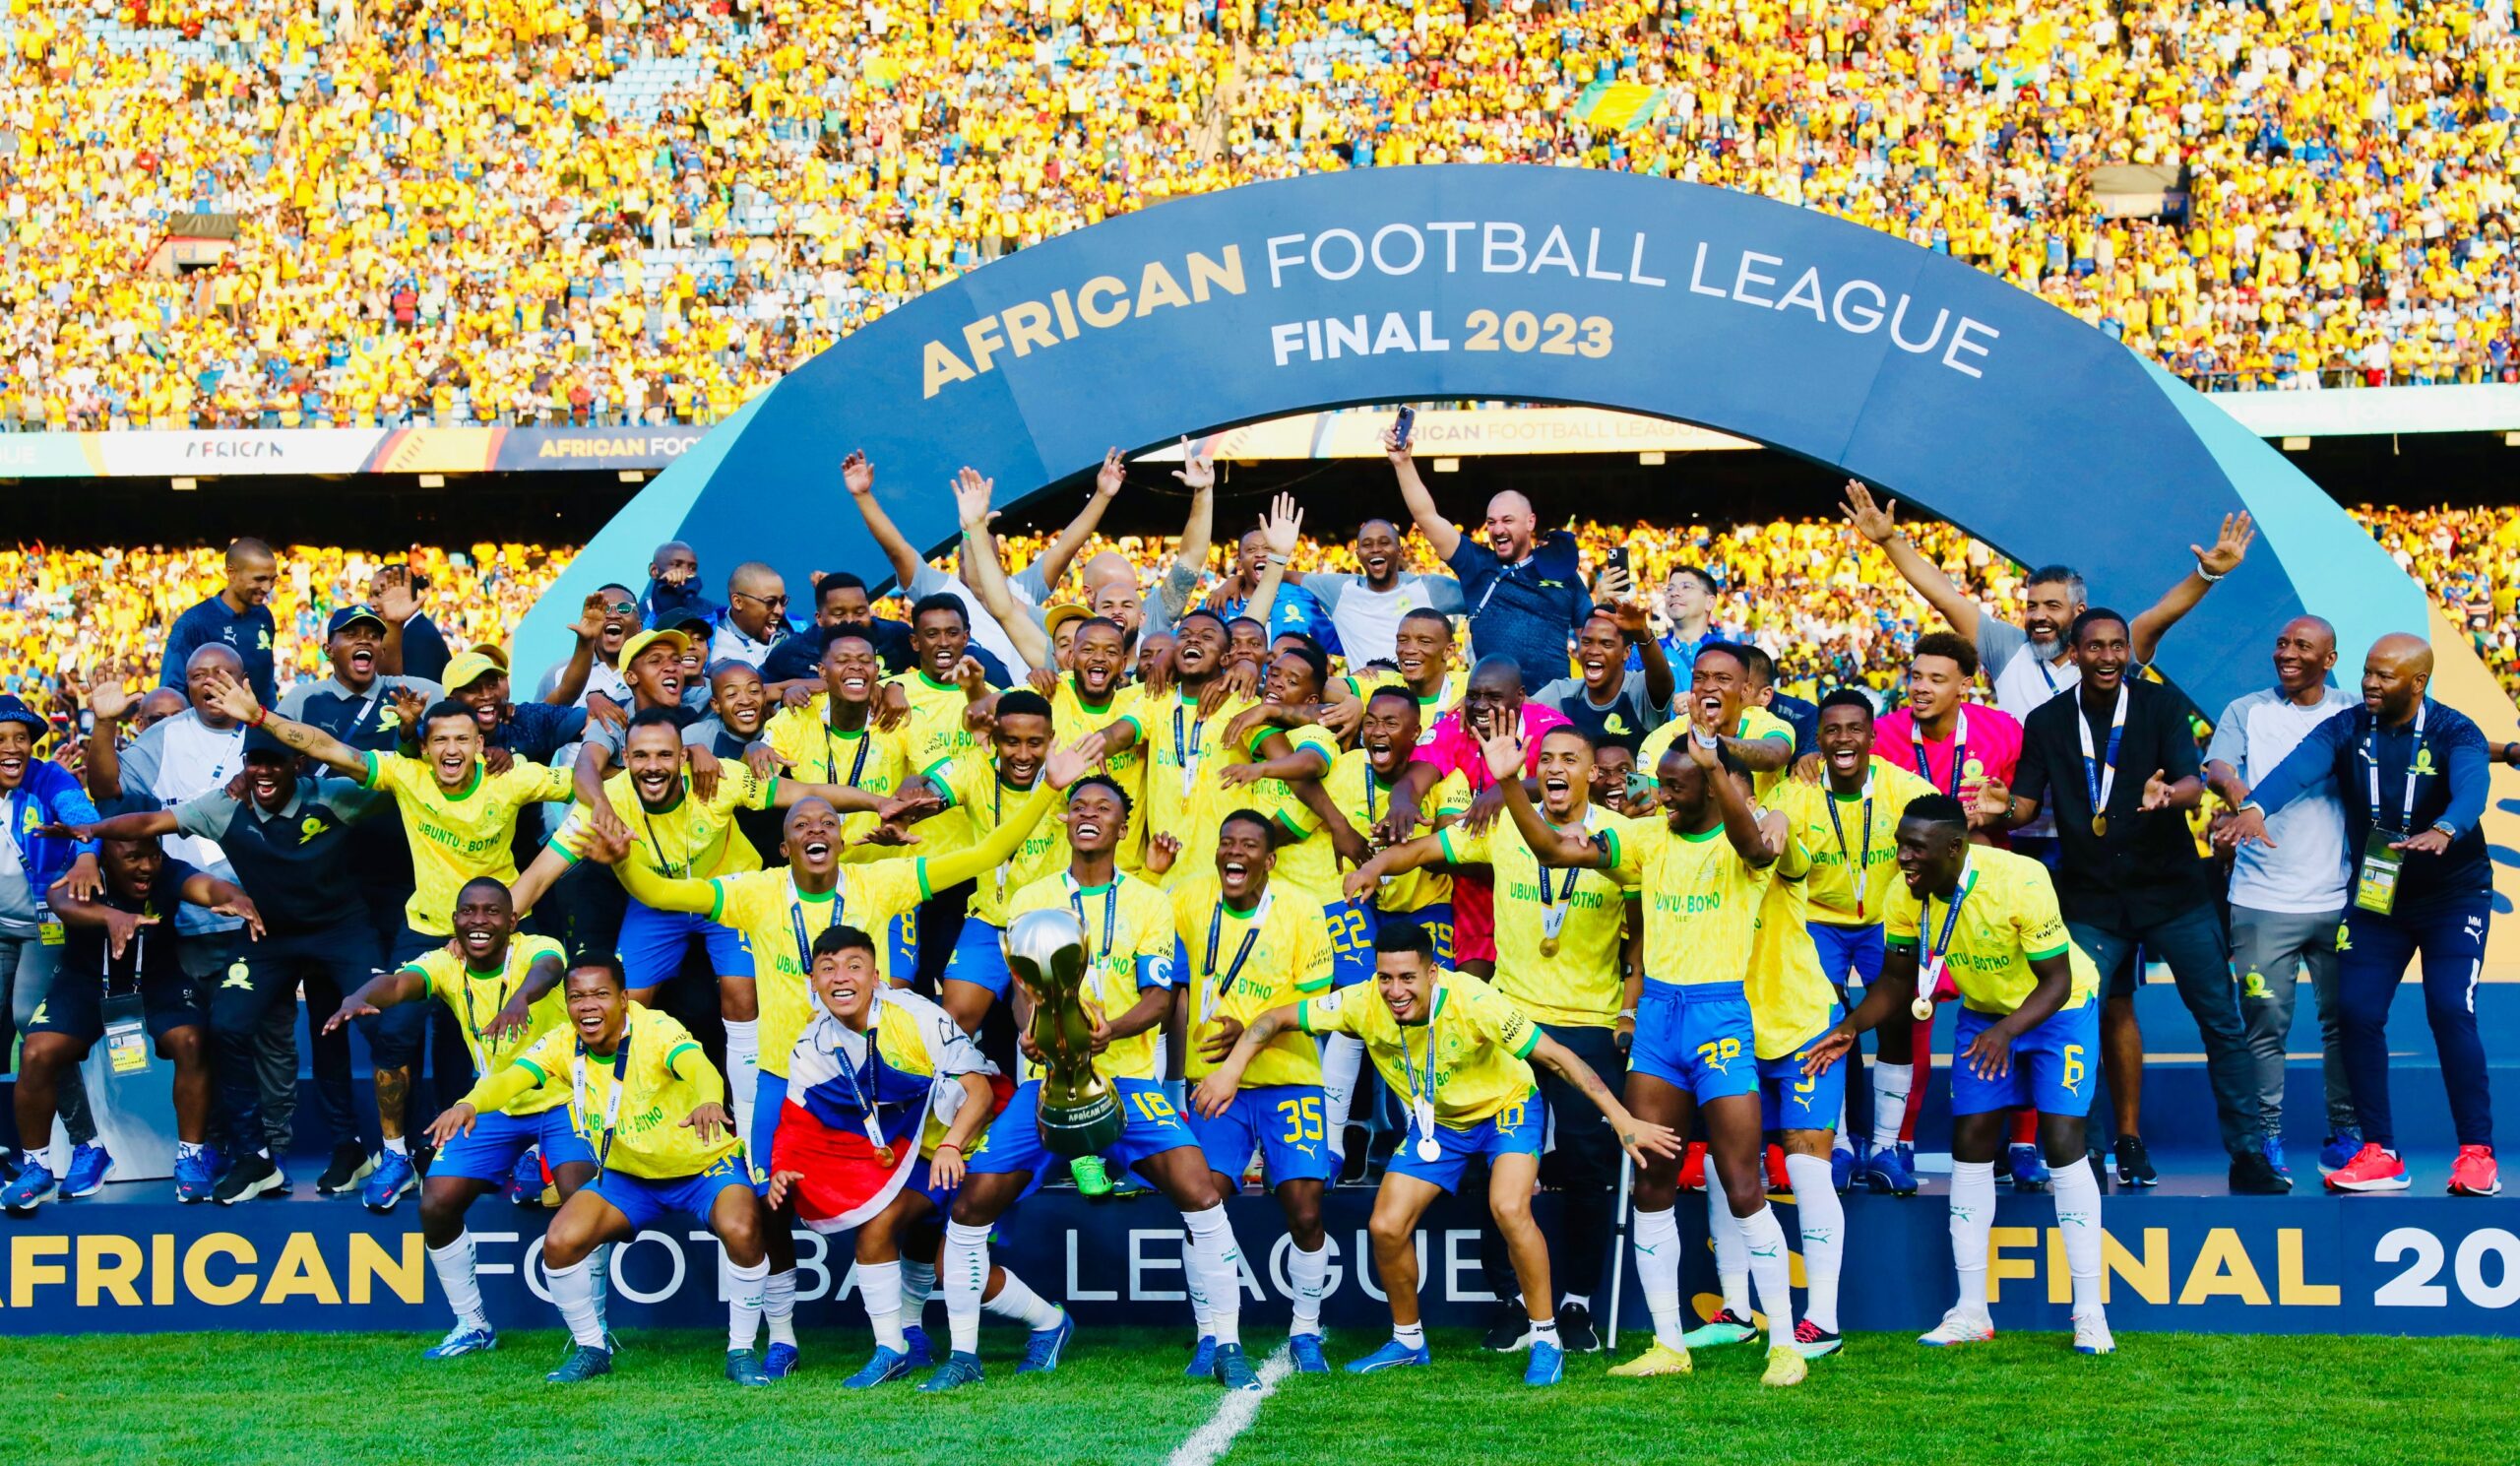 2023 African Football League final - Wikipedia